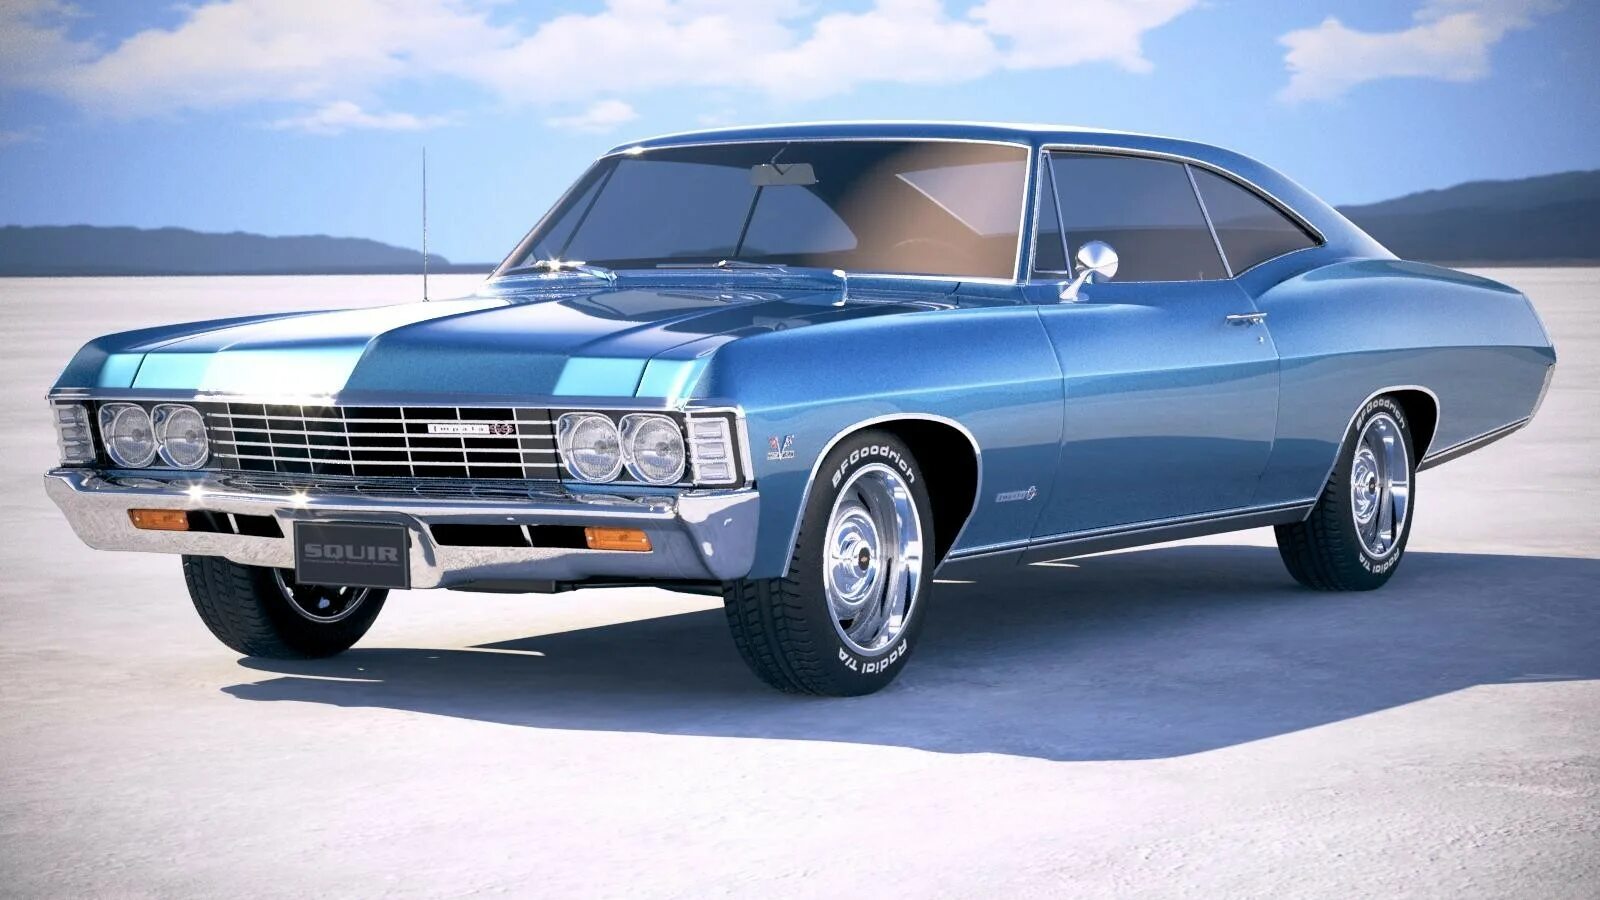 Chevrolet impala год. Chevrolet Impala 1967. Shavrale Tempala 1967. Chevrolet Impala SS 1967. Шевроле Ипанема 1967.